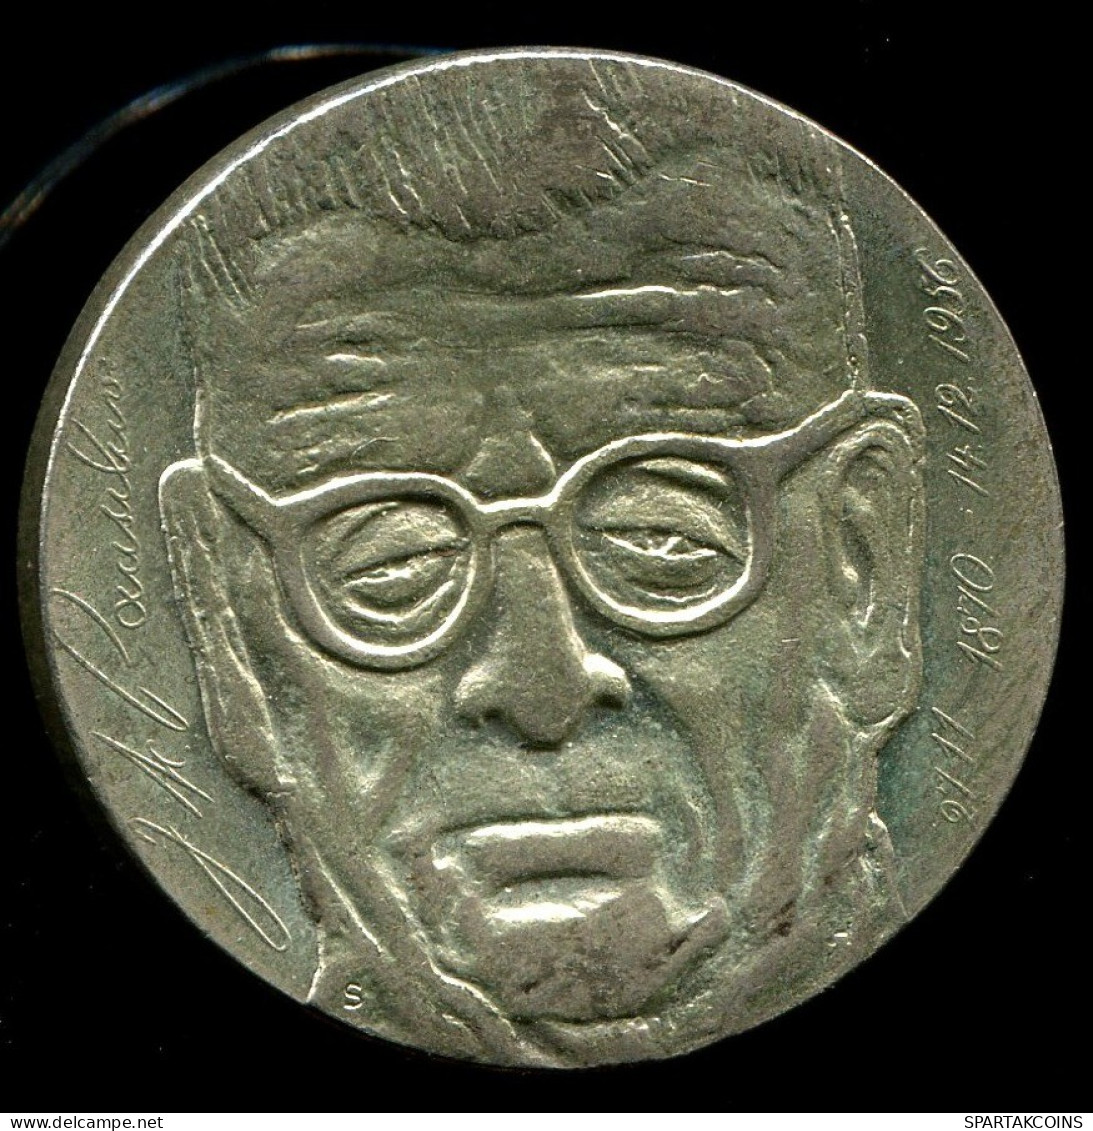 10 MARKKAA 1970 FINLAND Silver Coin #W10365.34.U.A - Finland